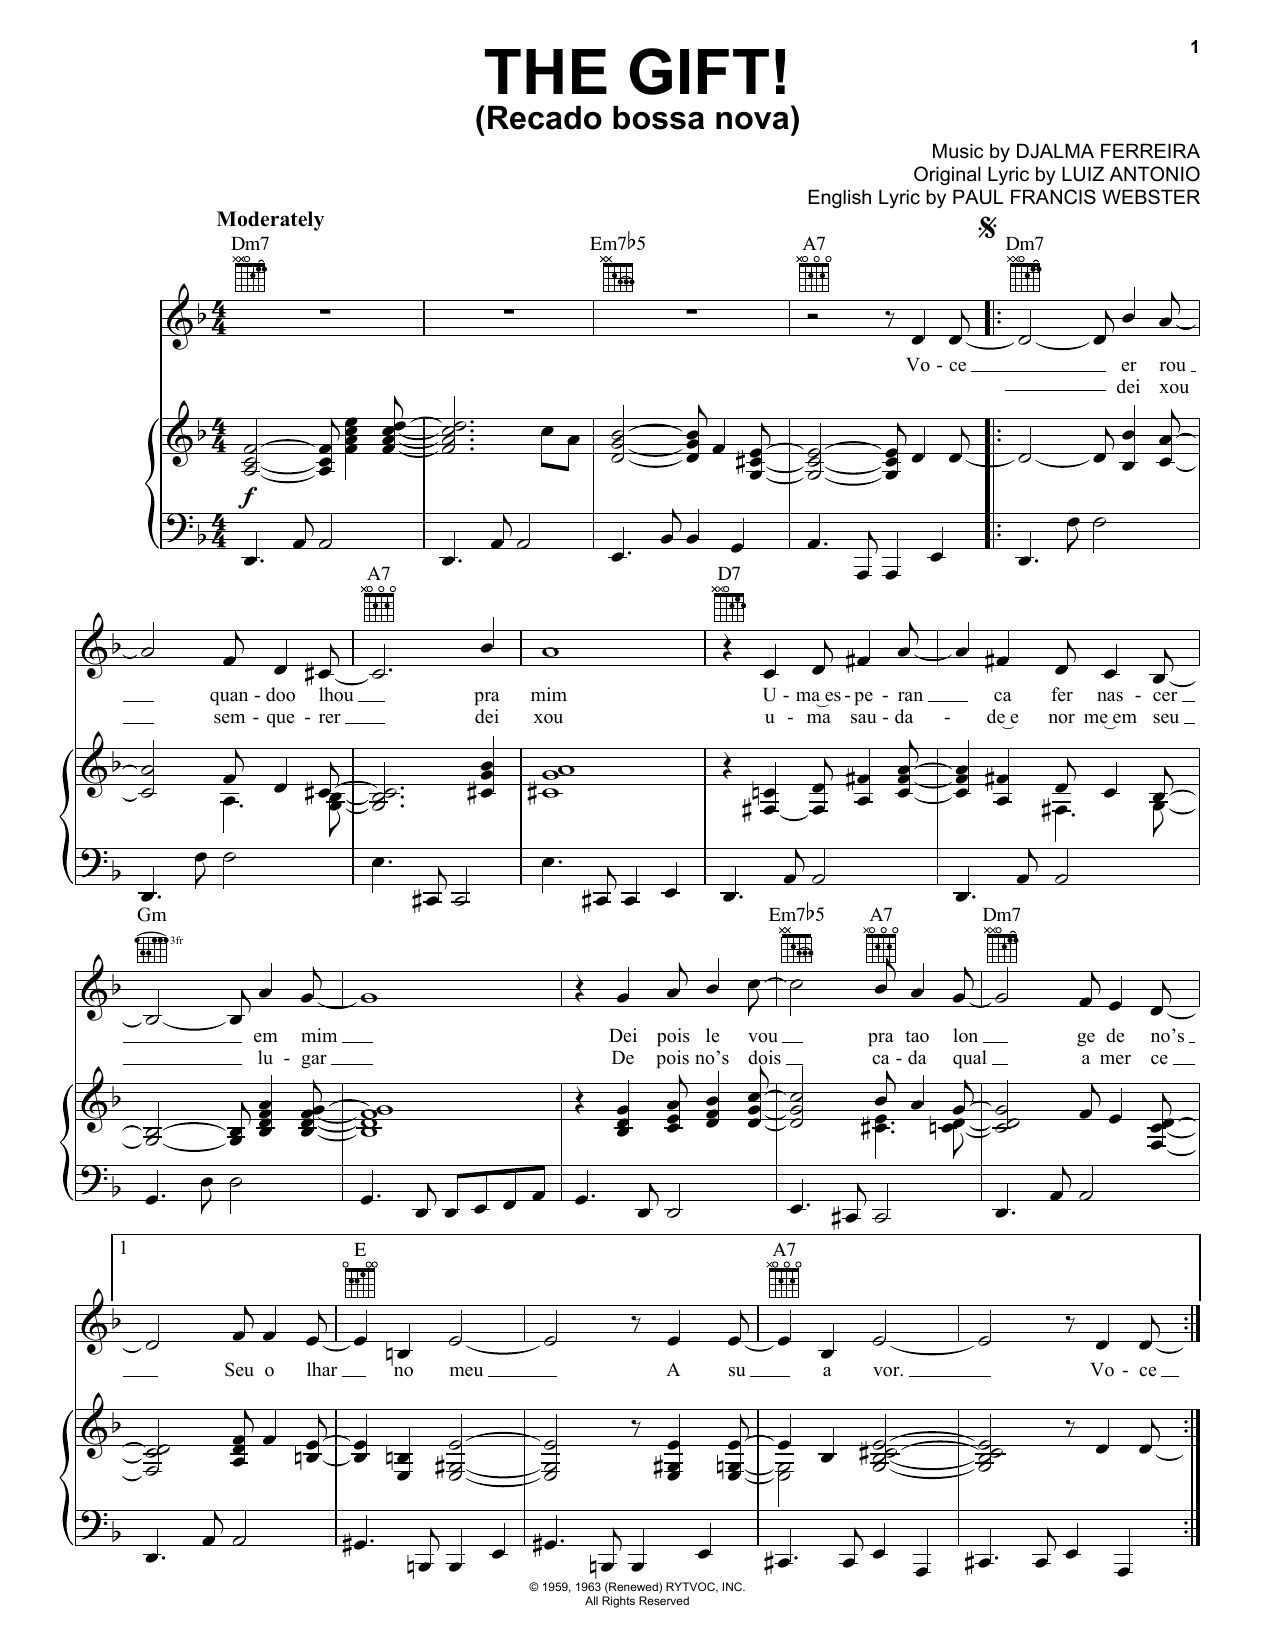 Luiz Antonio The Gift! (Recado Bossa Nova) Sheet Music Notes & Chords for Piano Solo - Download or Print PDF